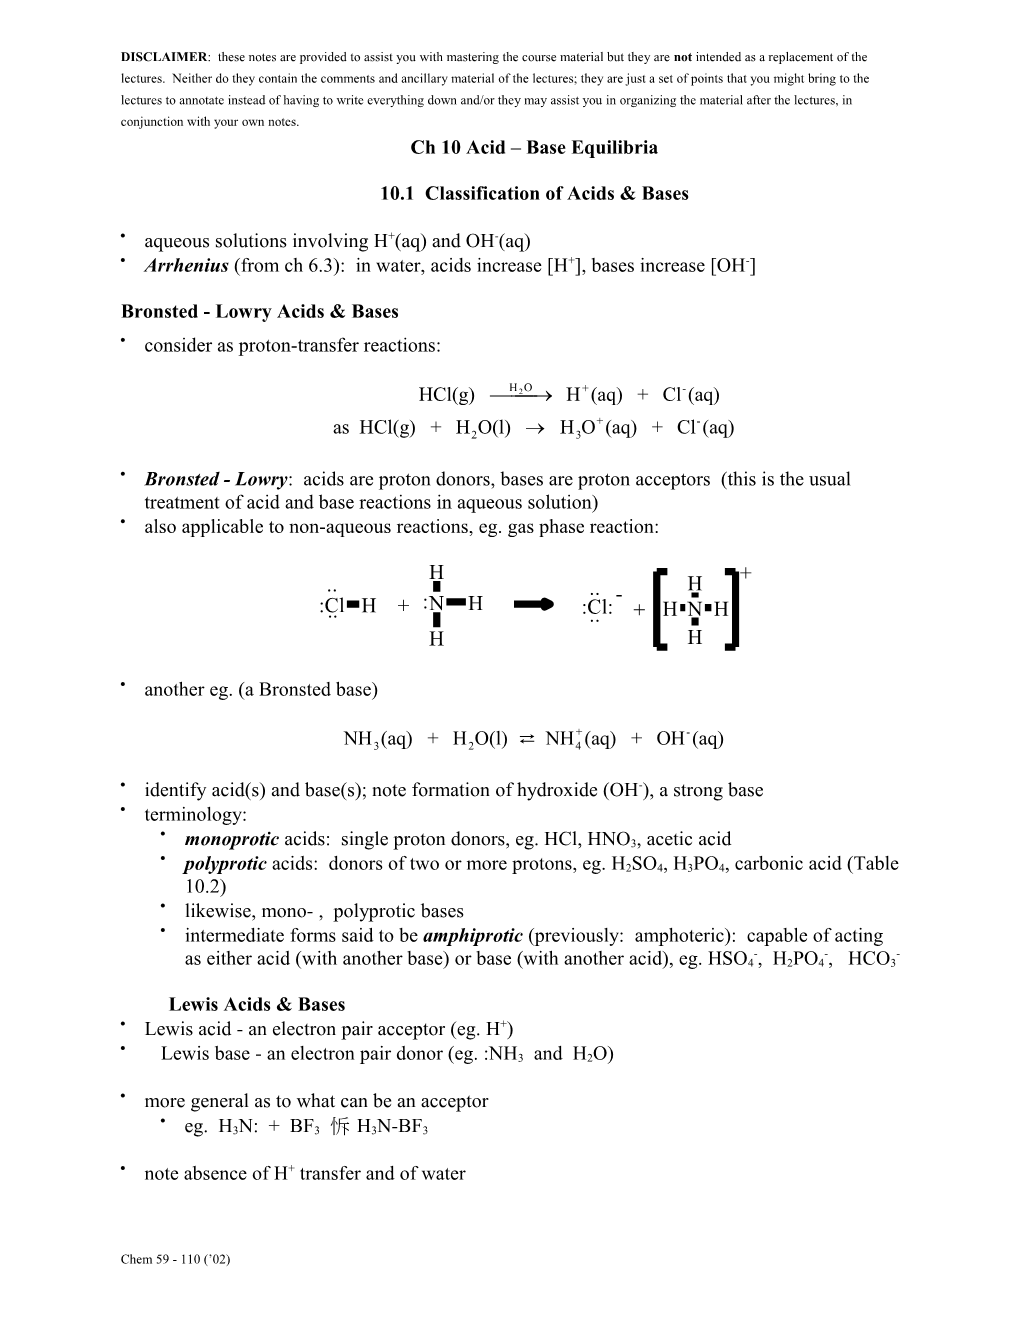 Ch 16 Acid - Base Equilibria